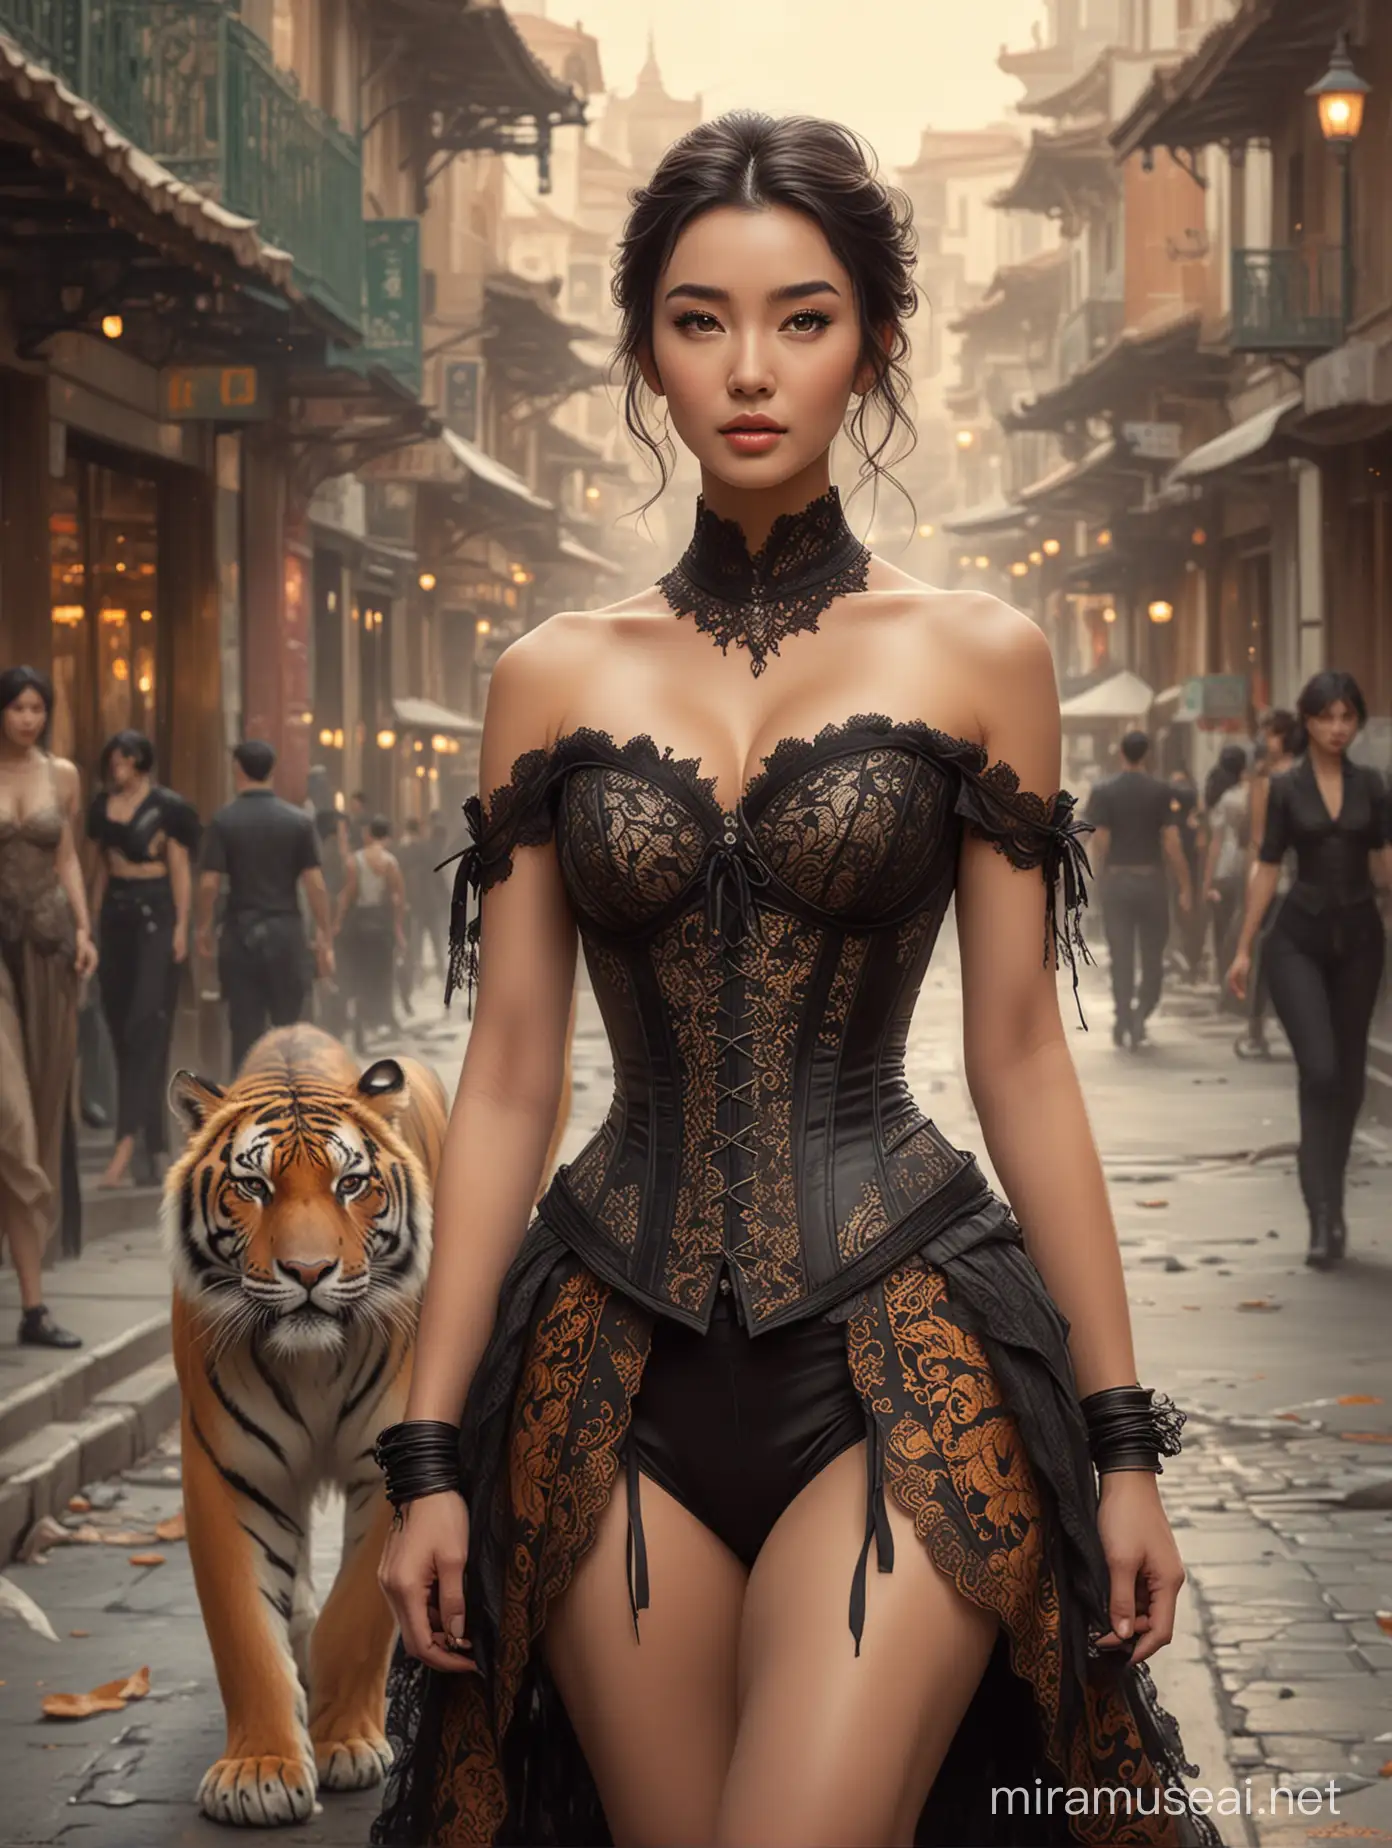 Elegant Li Bingbing in Lace Corset Strolling with Tiger in Urban Bustle